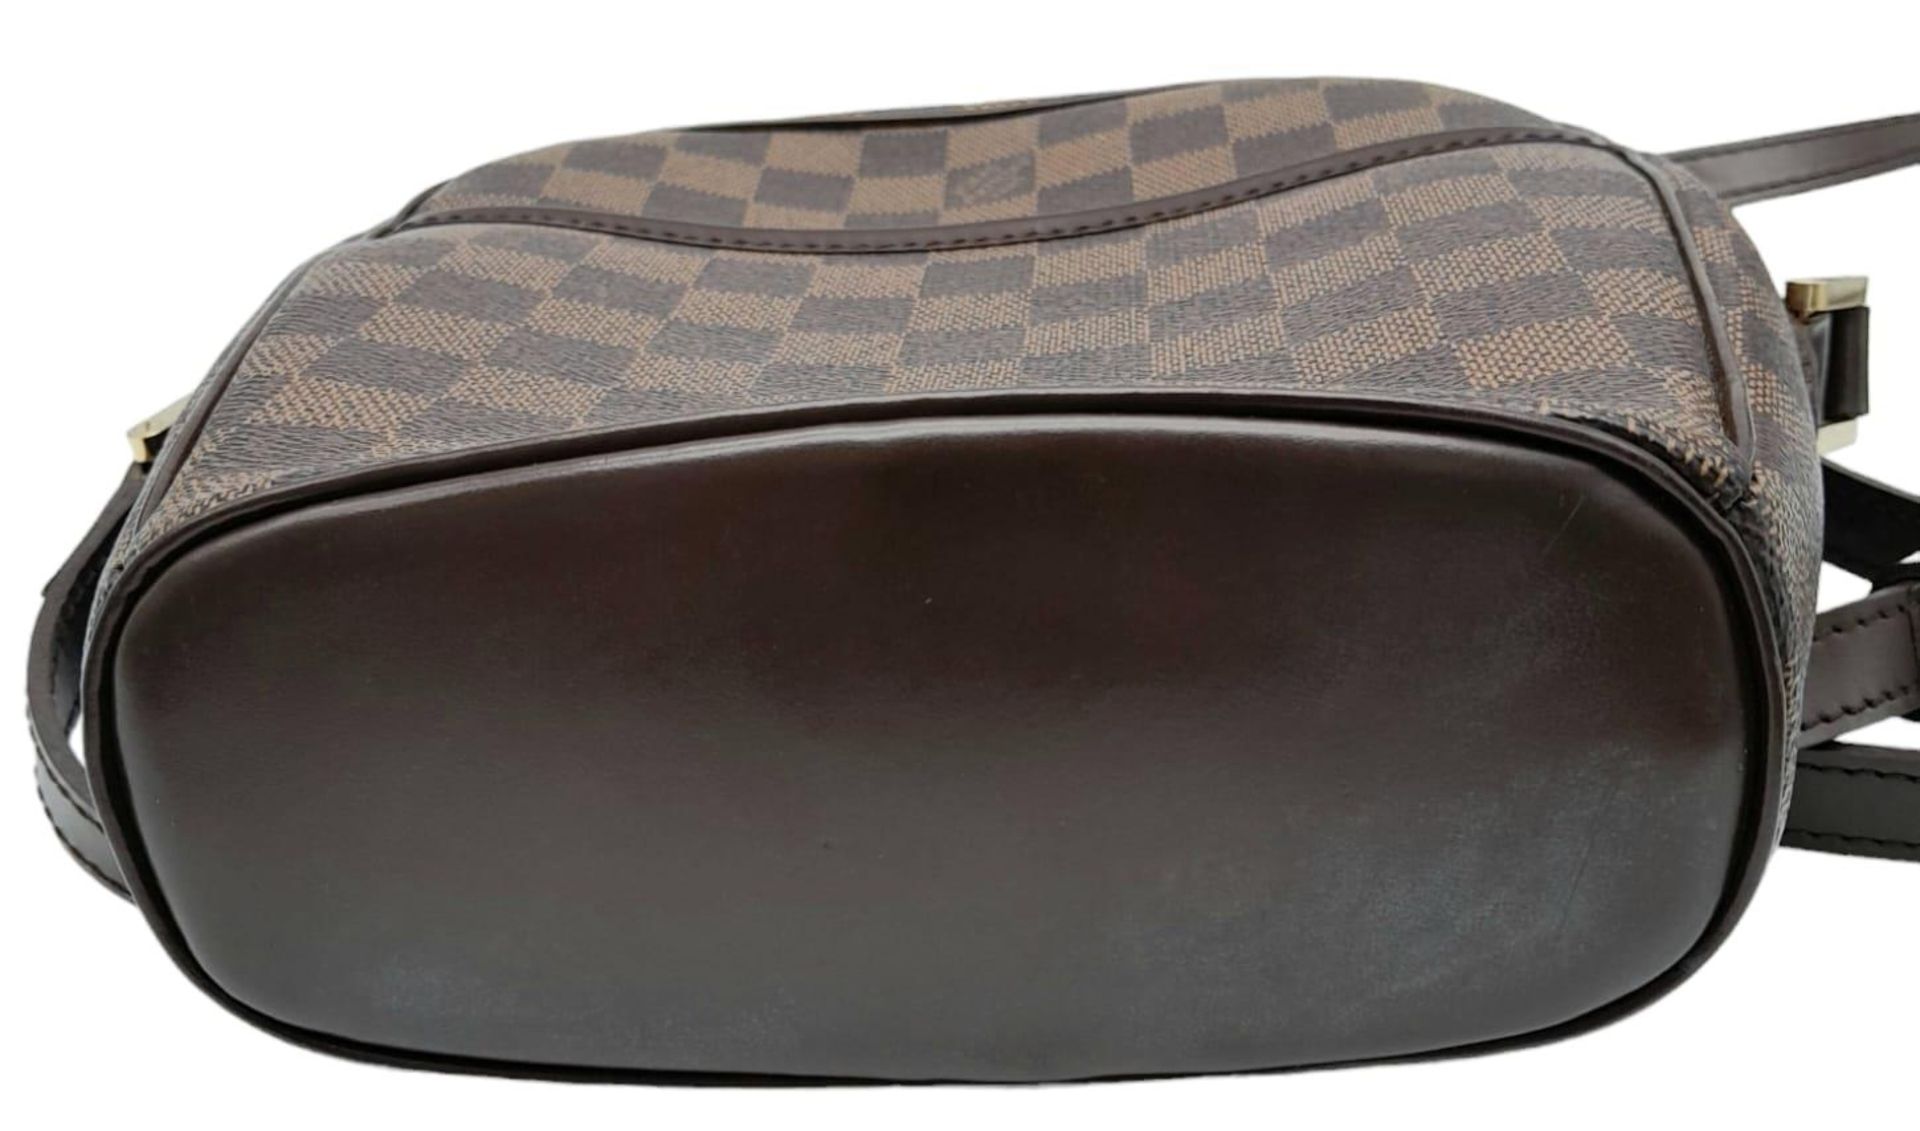 A Louis Vuitton Damier Ebene 'Ipanema' Crossbody Bag. Leather exterior with gold-toned hardware, - Bild 5 aus 8